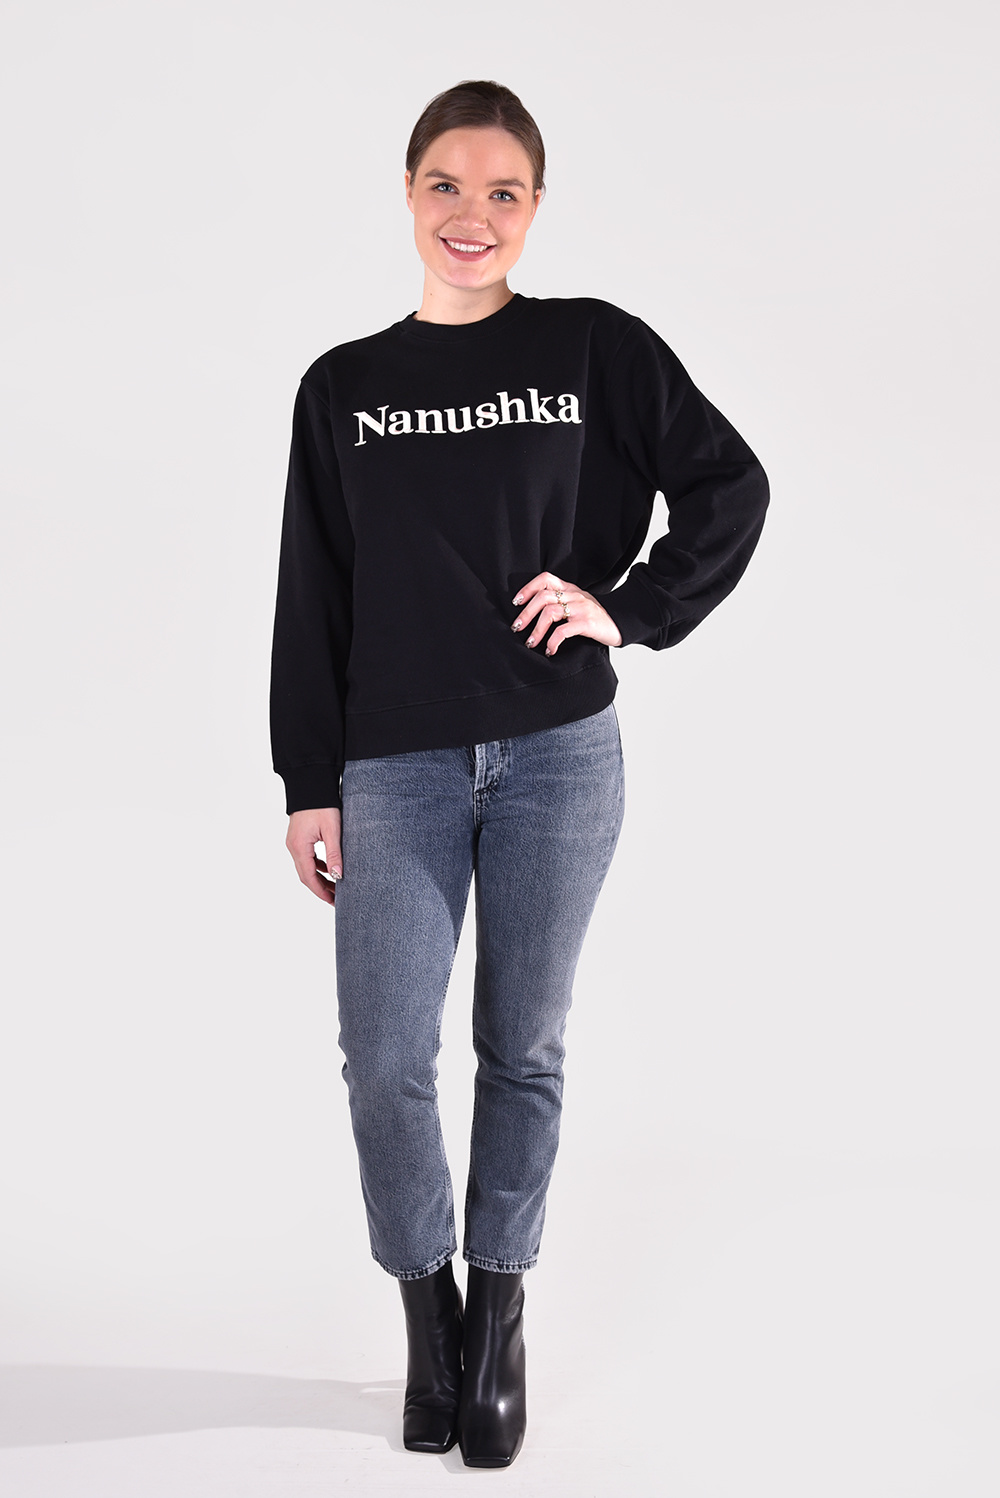 Nanushka trui Remy NM21PFSW01099 zwart